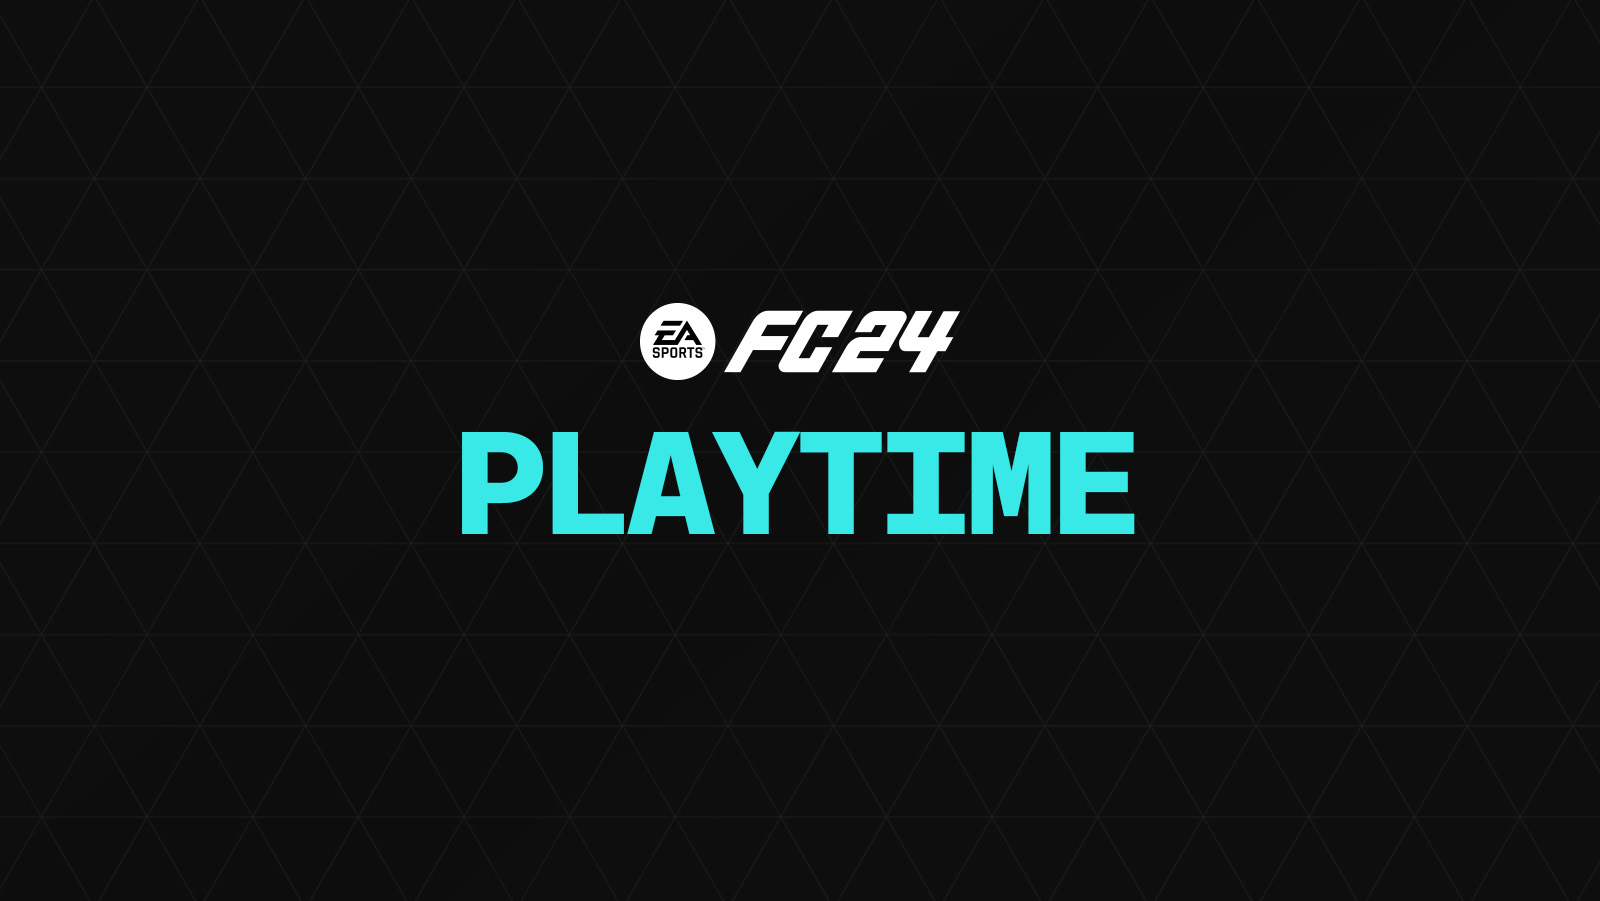 Fc 24 Playtime – Fifplay